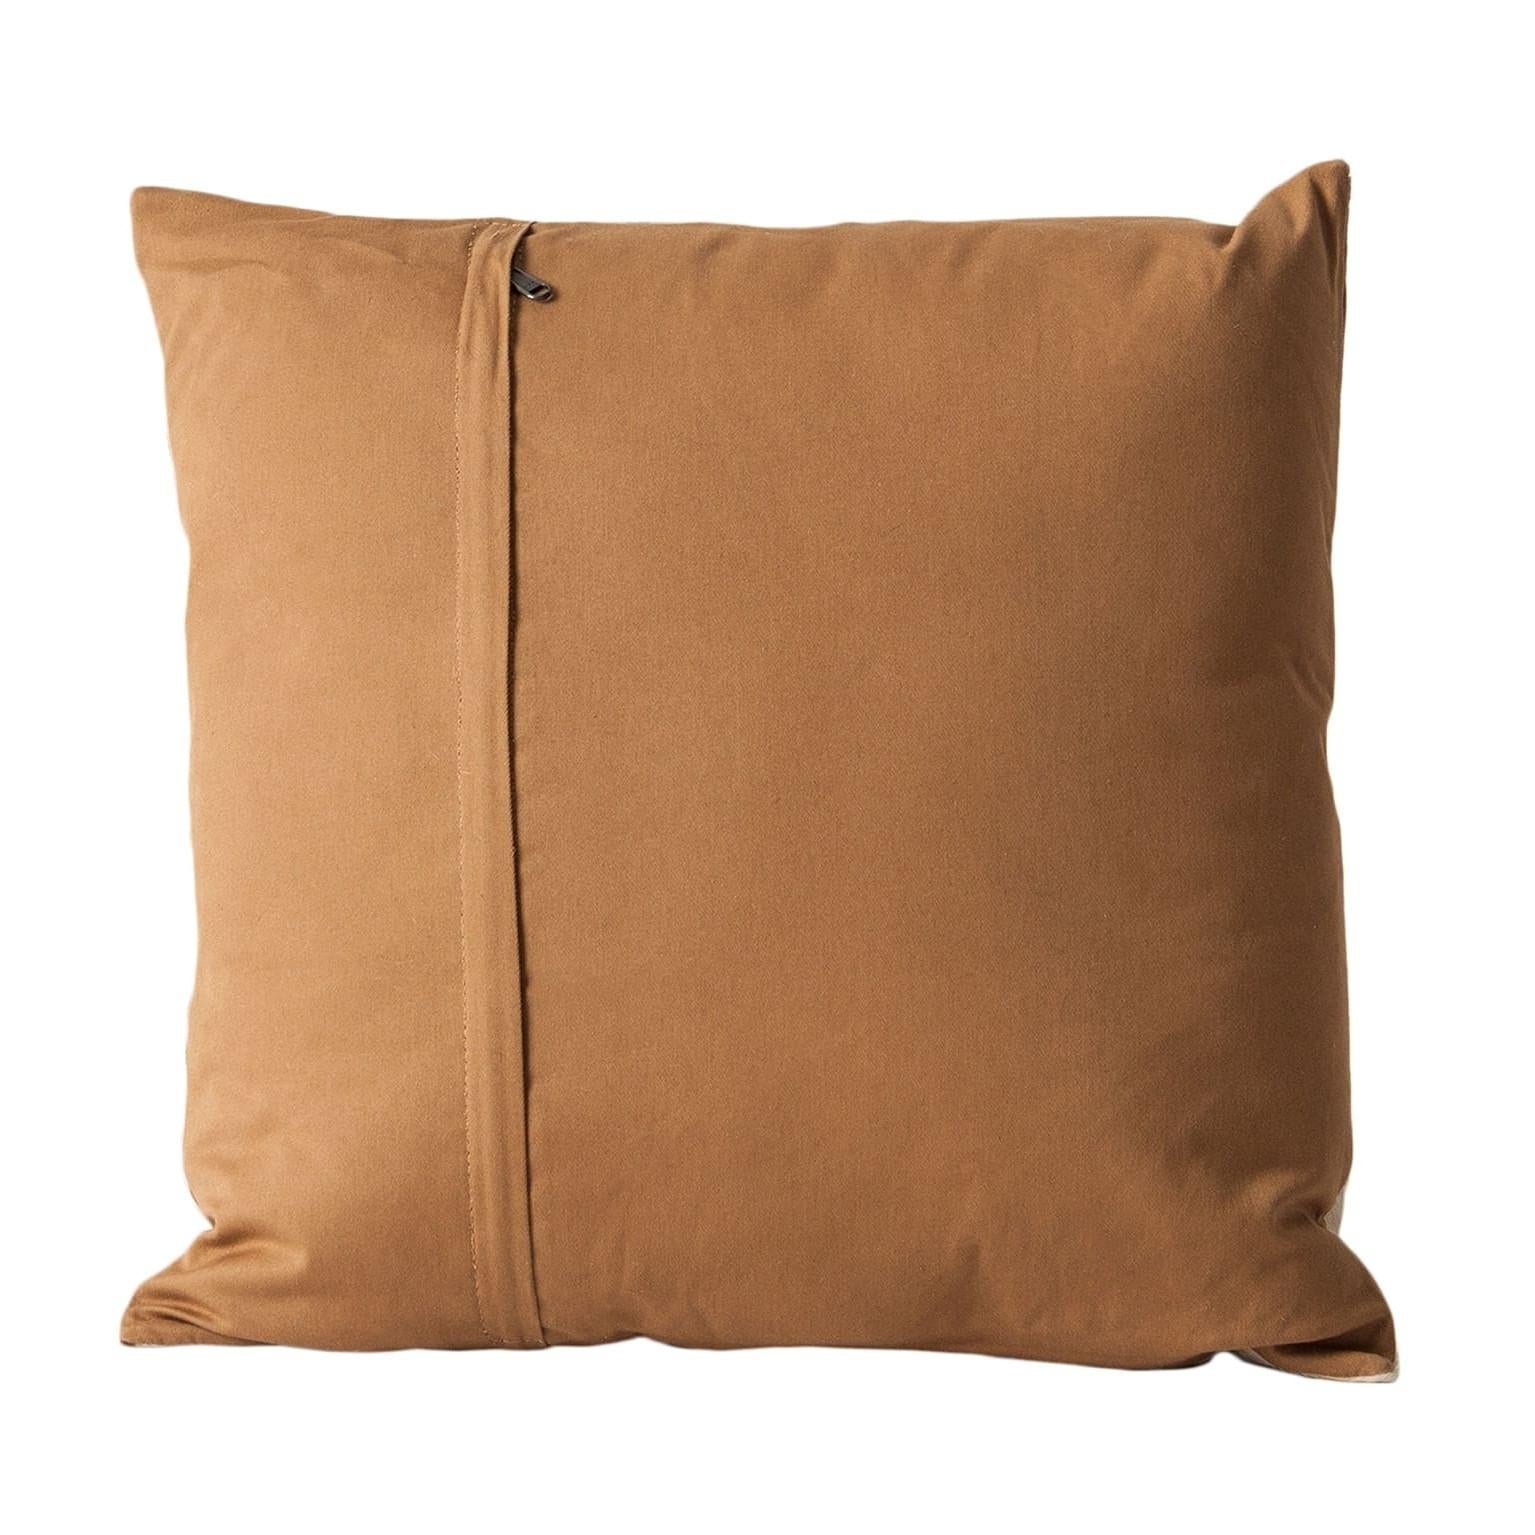 Brown and white cowhide cushion.